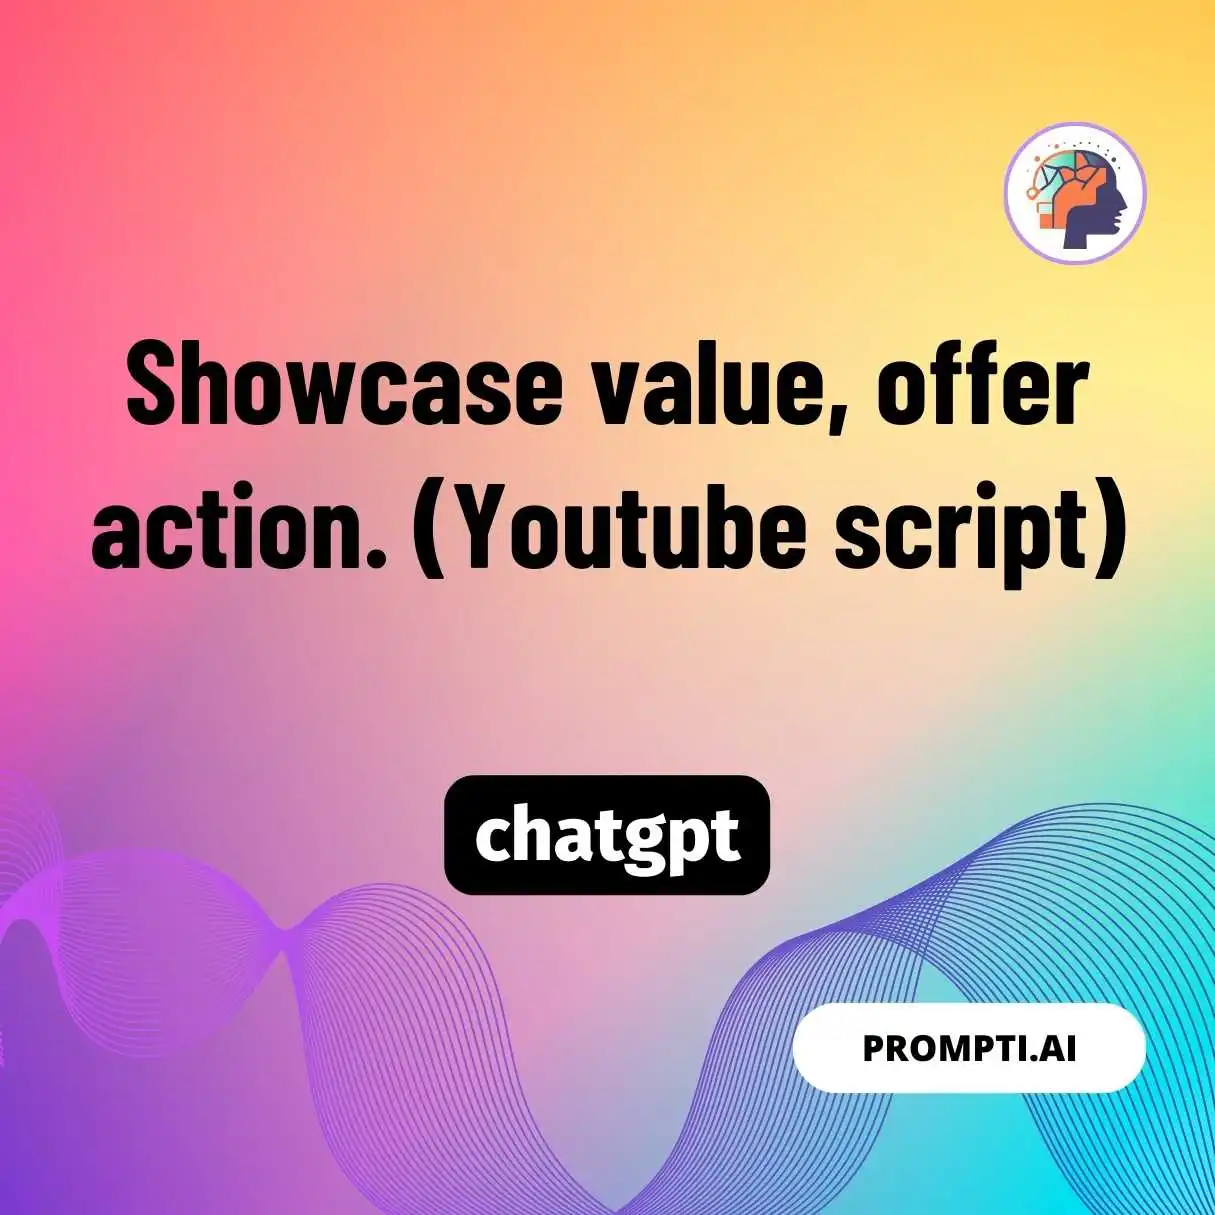 Showcase value, offer action. (Youtube script)